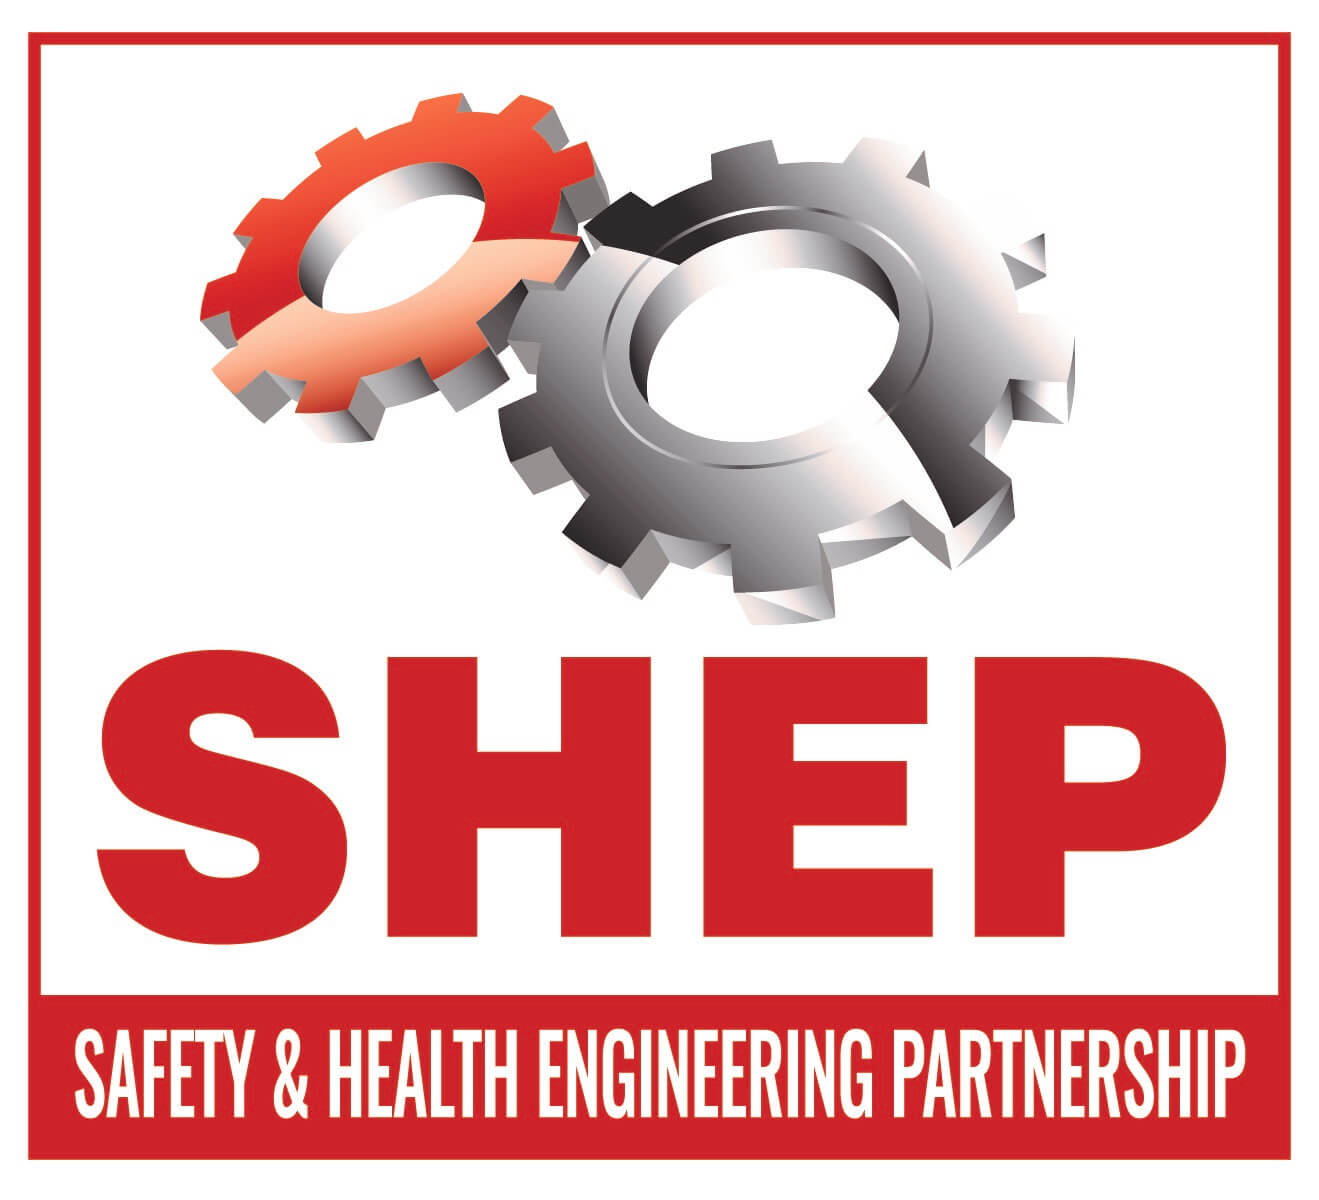 SHEP logo